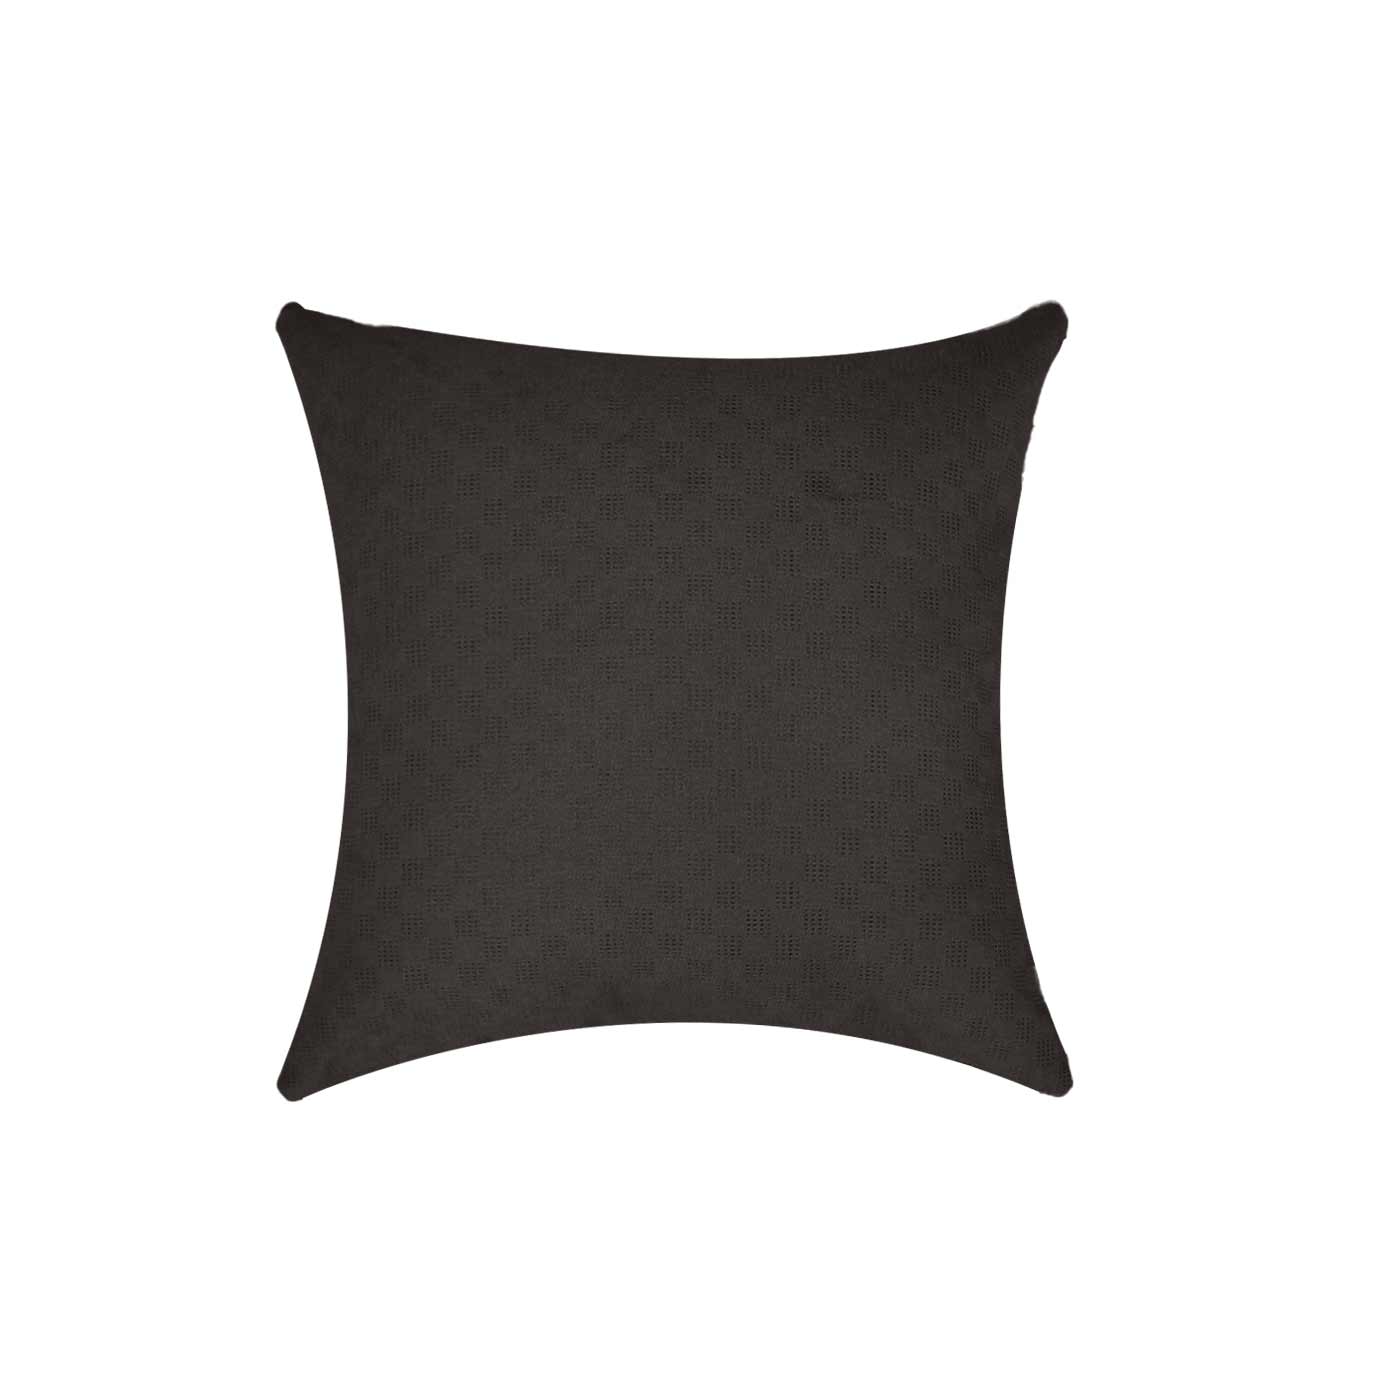 Muko Perforated Square Brown Cushion